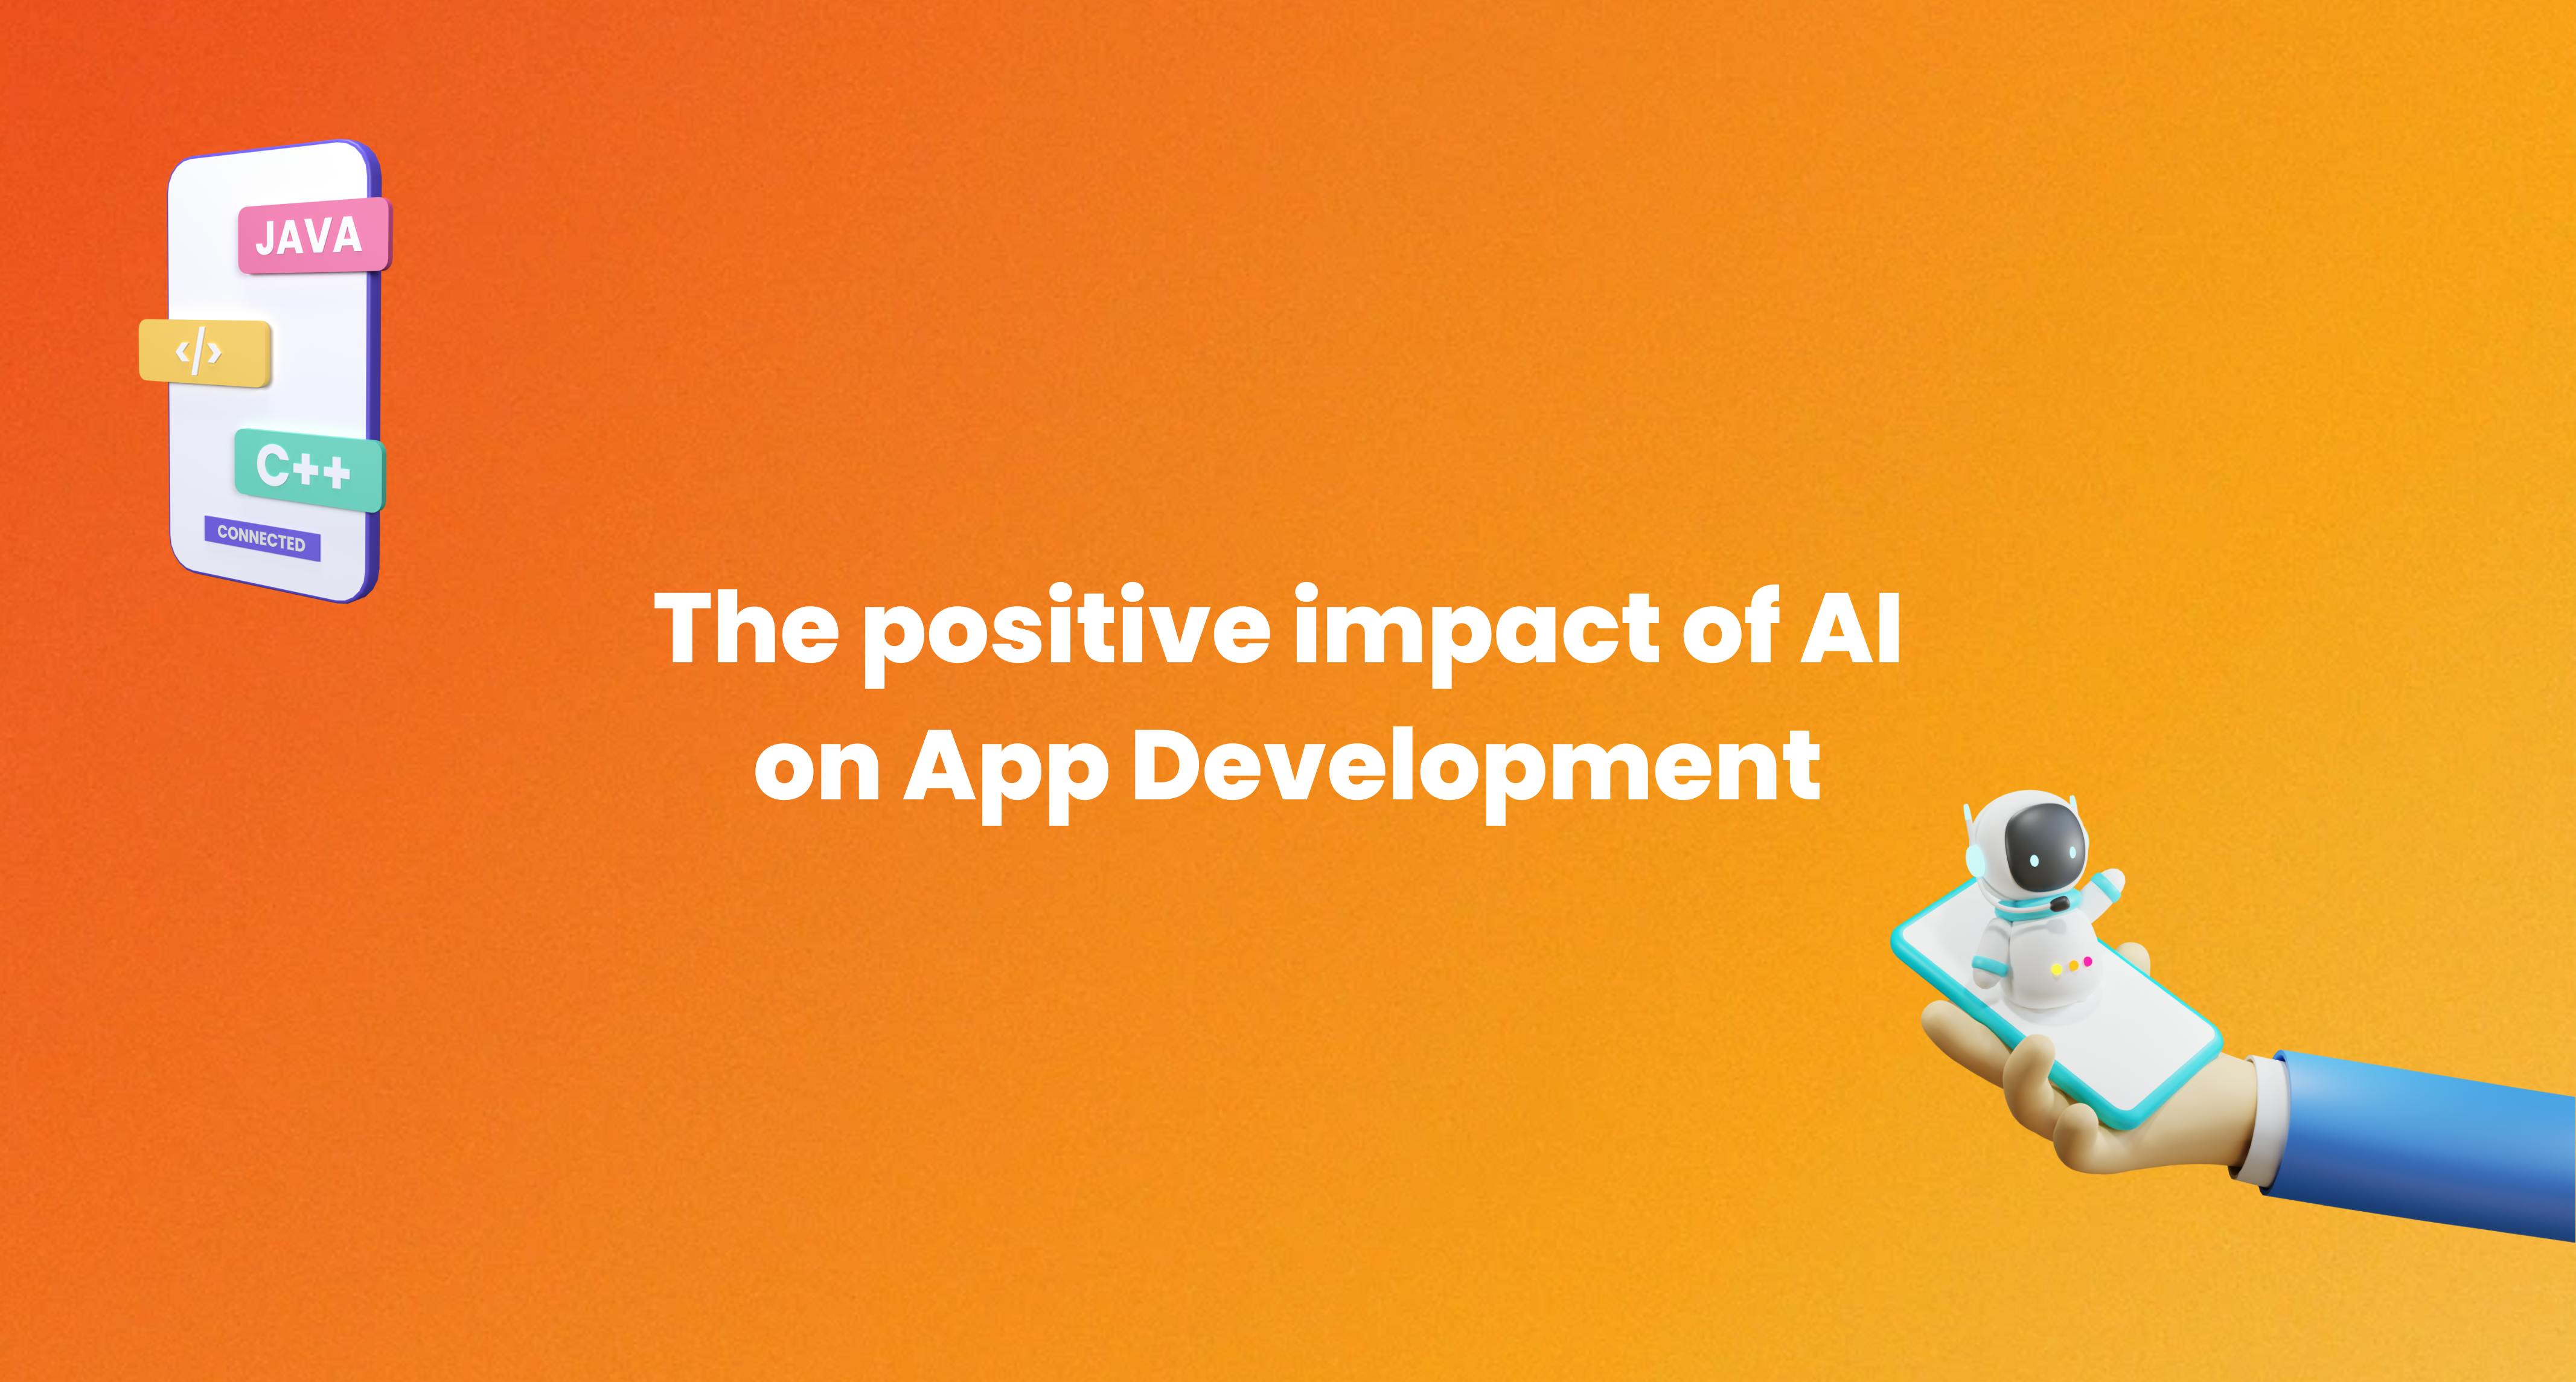 Nightborn - The positive impact of AI on App Development